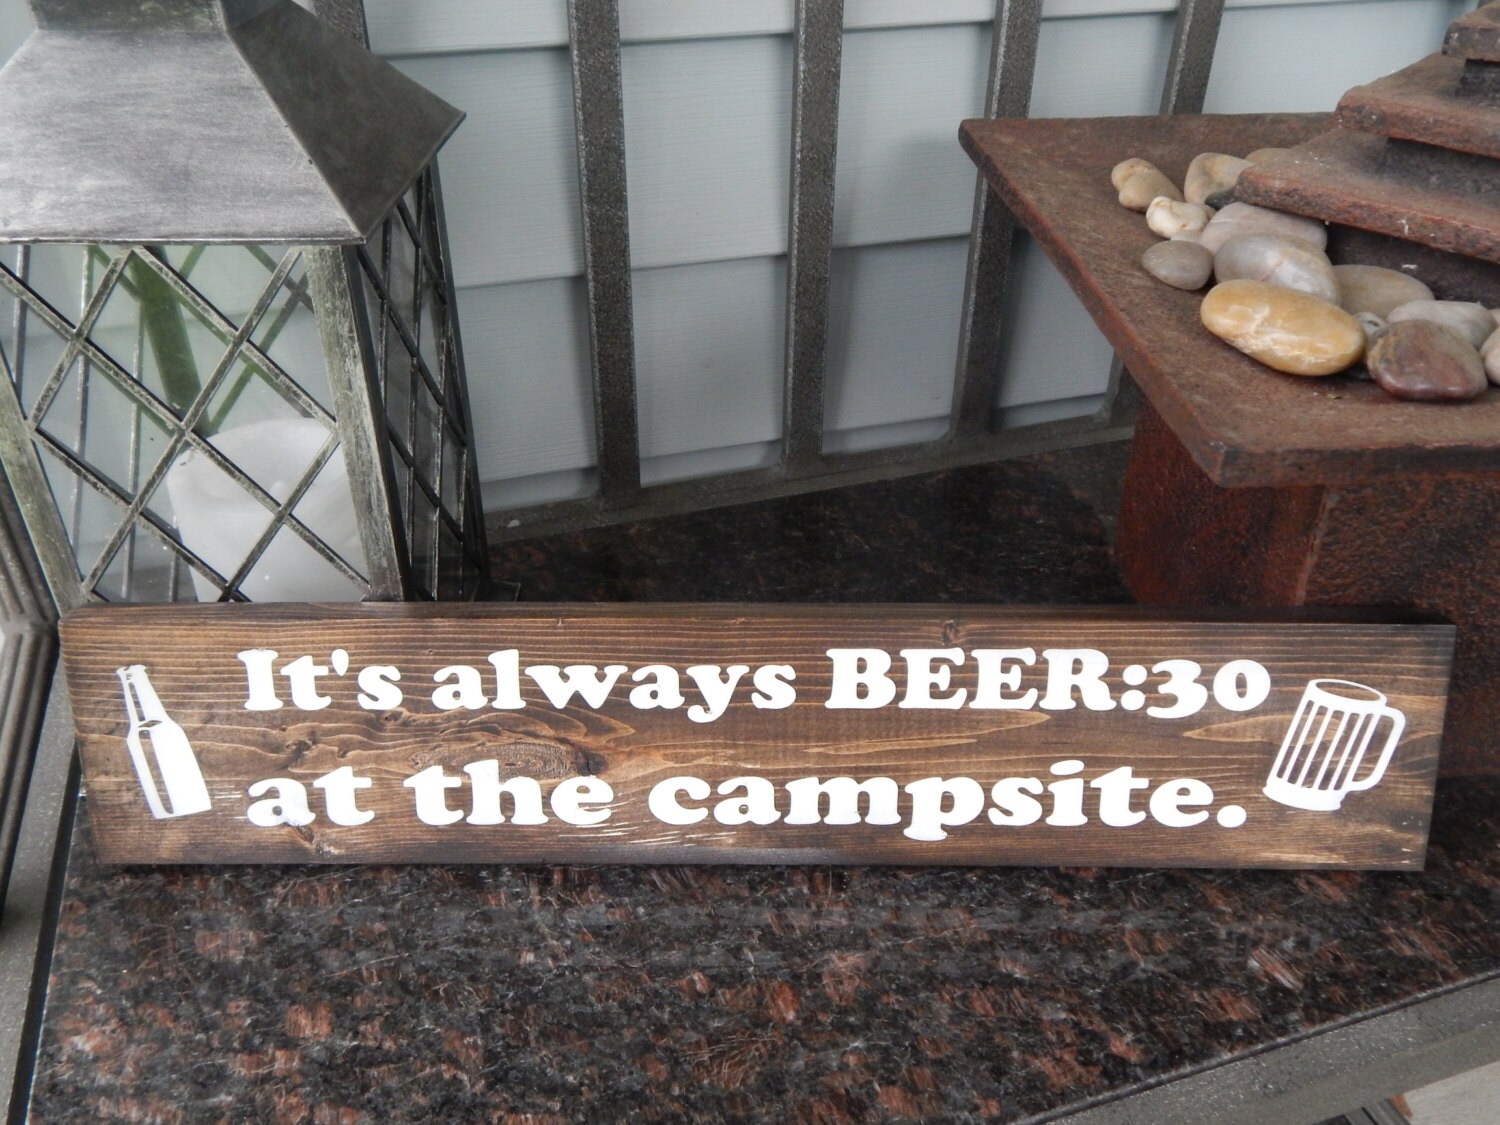 Funny beer quote sign campsite decor camper decor indoor